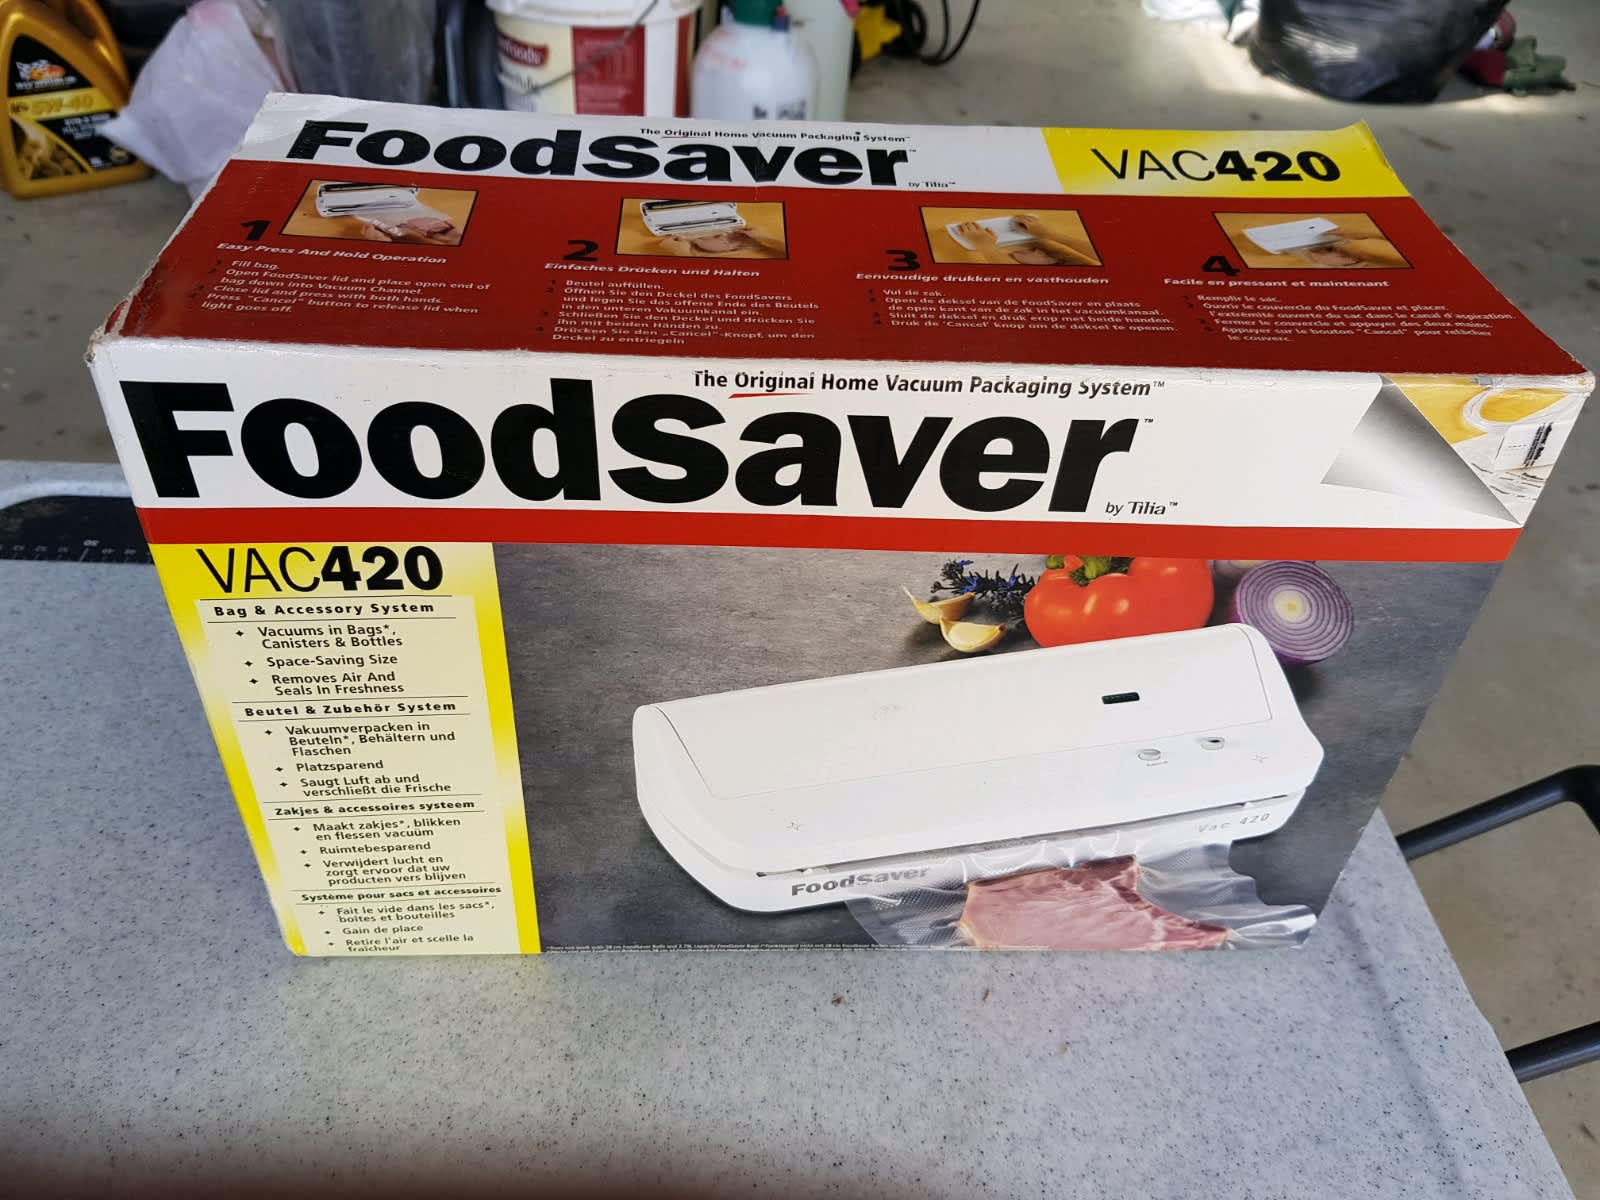 100x Vacuum Sealer Bags Food Storage Saver Heat Seal Cryovac 20cm x 30cm